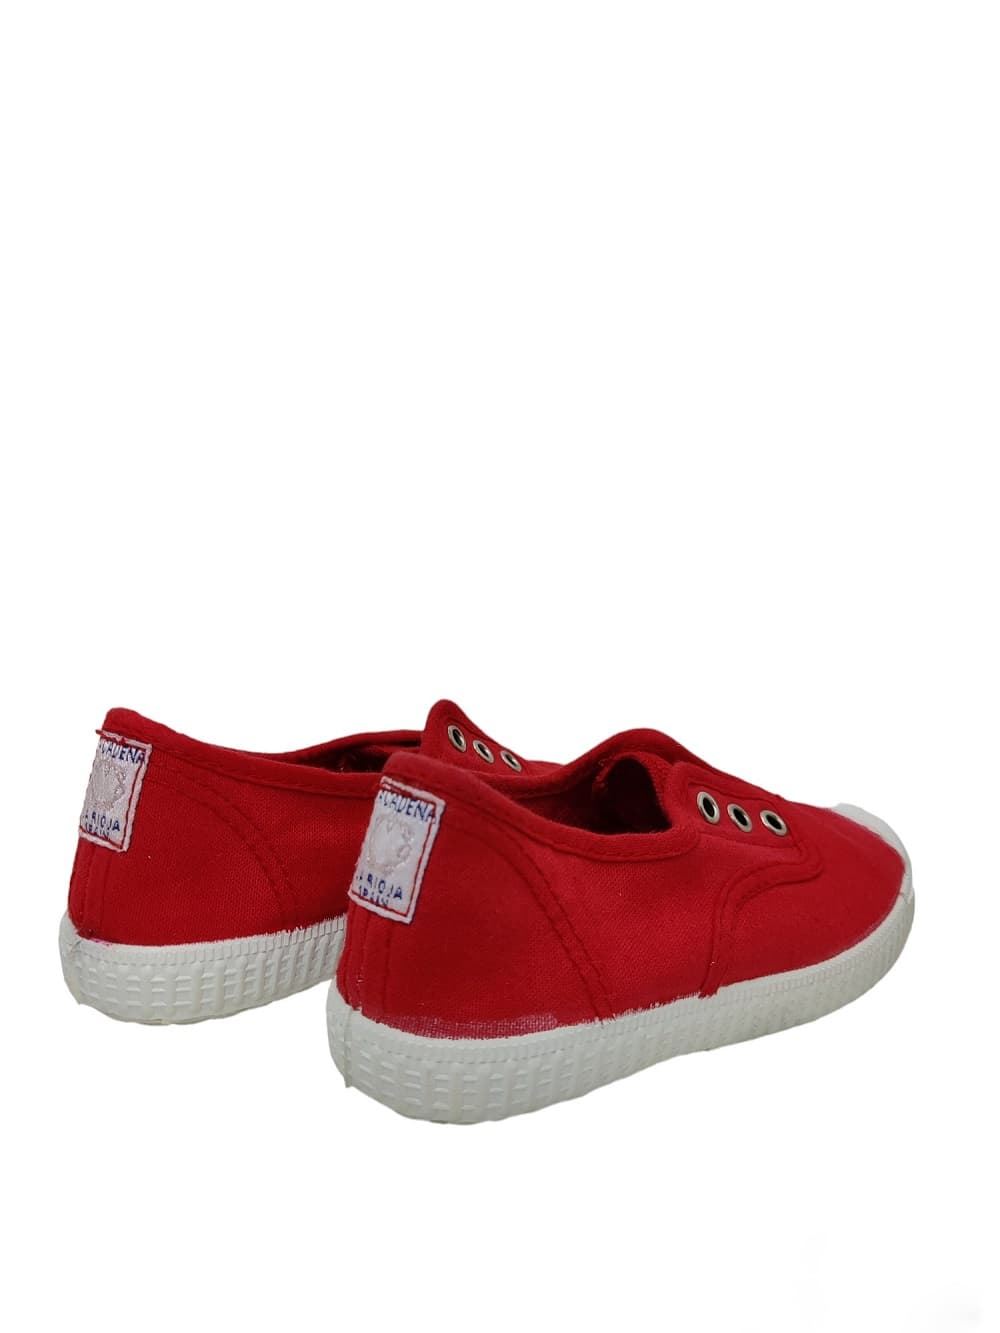 La Cadena Children's Red Canvas Shoes with Toecap - Image 3